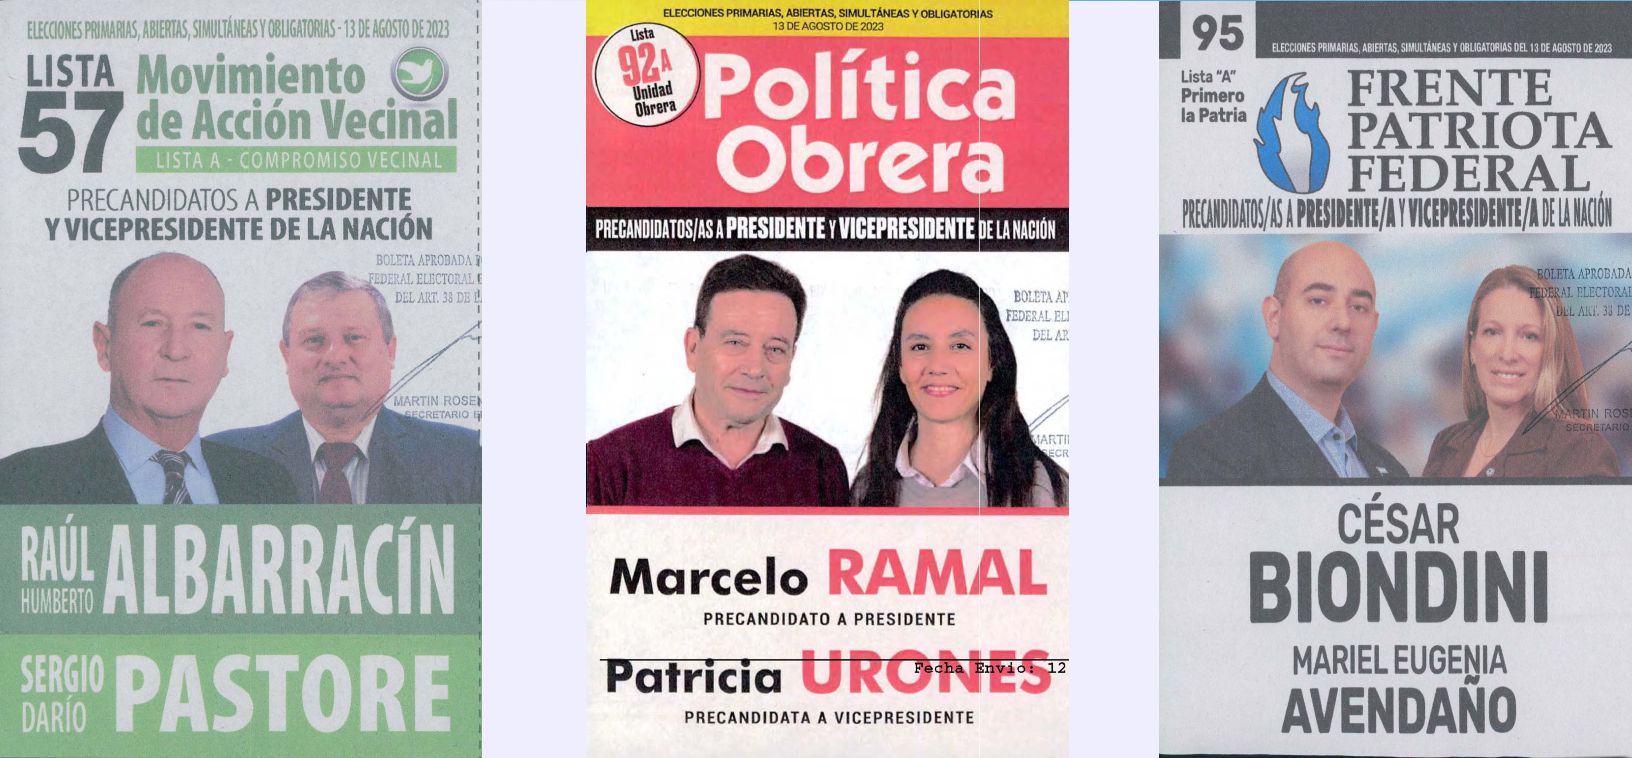 Lista 57: Movimiento de Acción Vecinal - Raúl Albarracín; Lista 92: Política Obrera - Marcelo Ramal; Lista 95: Frente Patriota Federal - César Biondini.